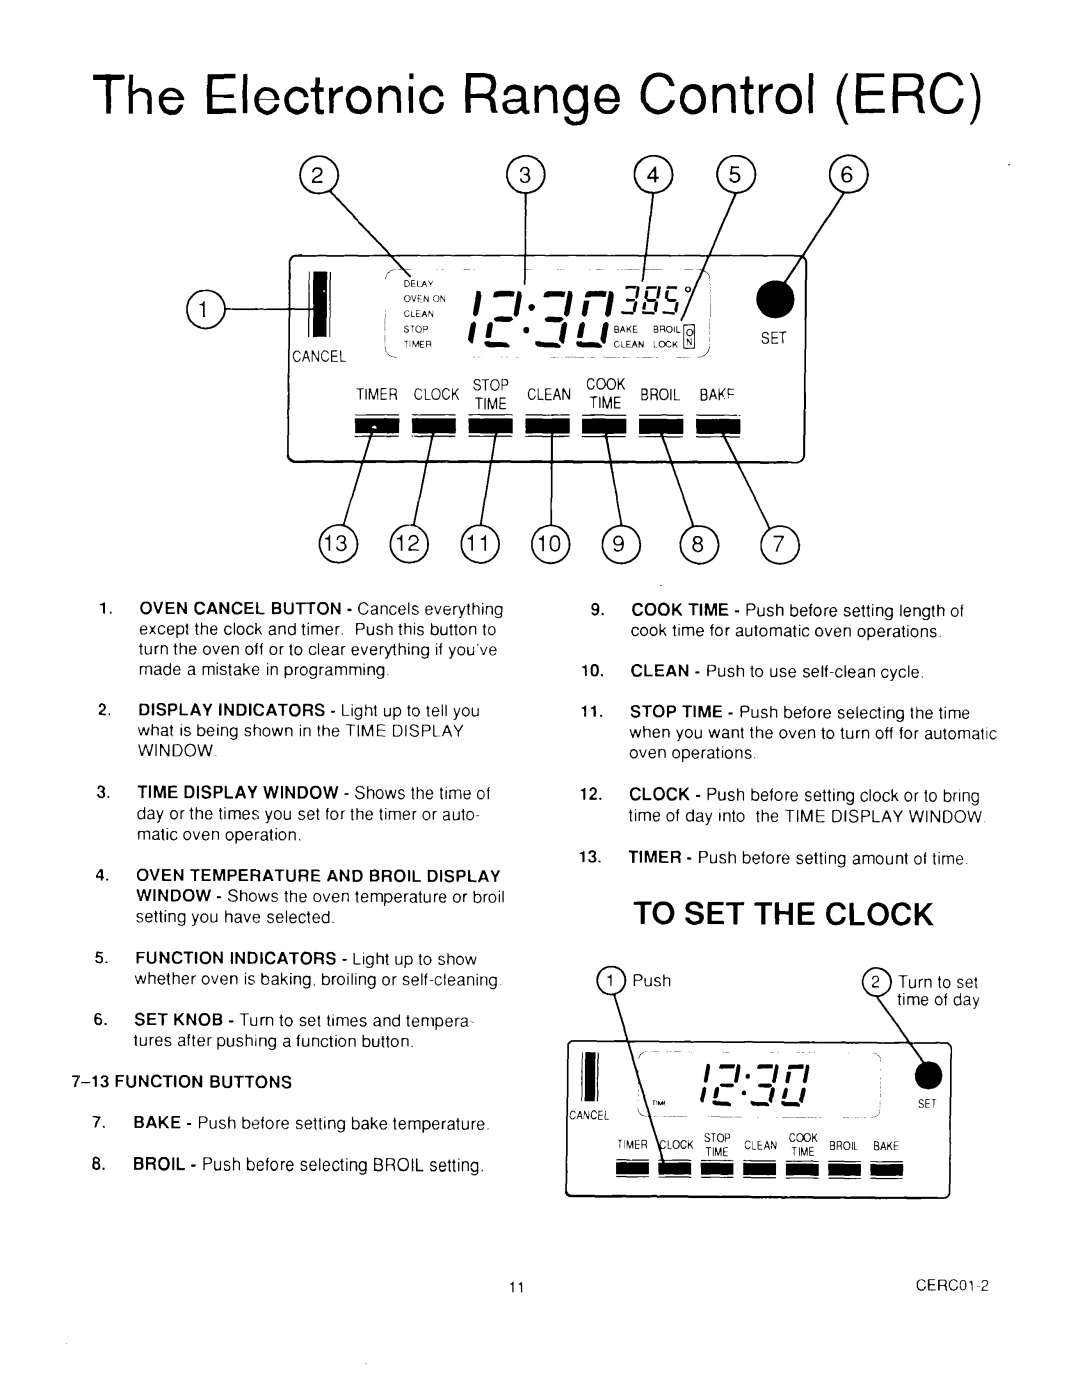 Roper MN11020(344197), B875 manual To Set The Clock, The Electronic Range Control ERC 